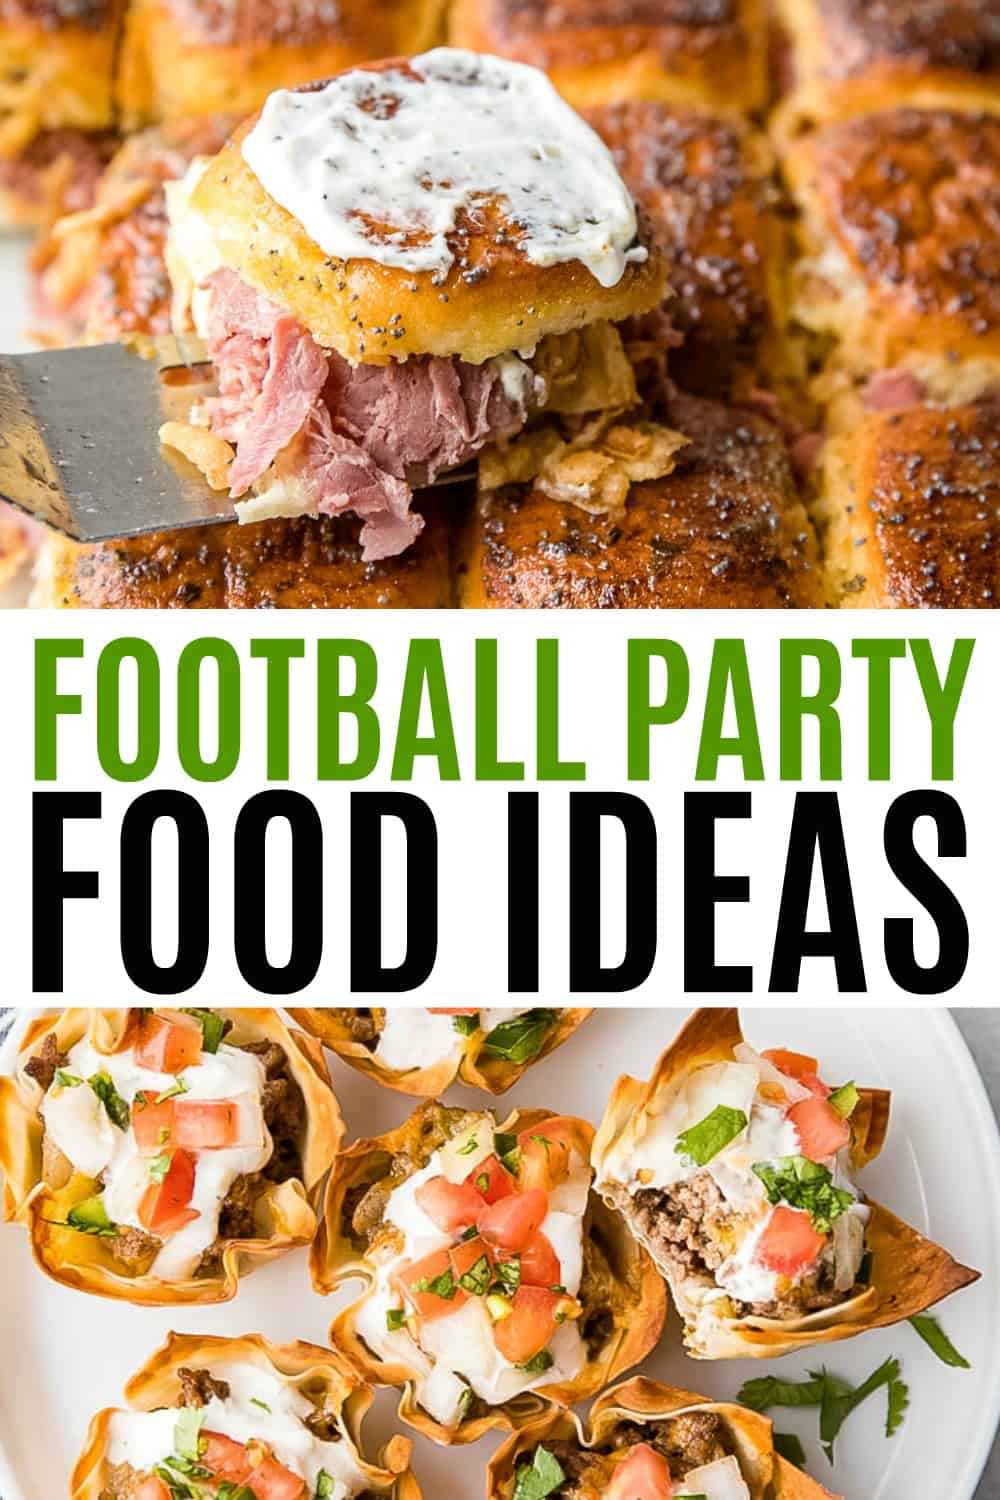 Festive Football Food Snacks for the Big Game